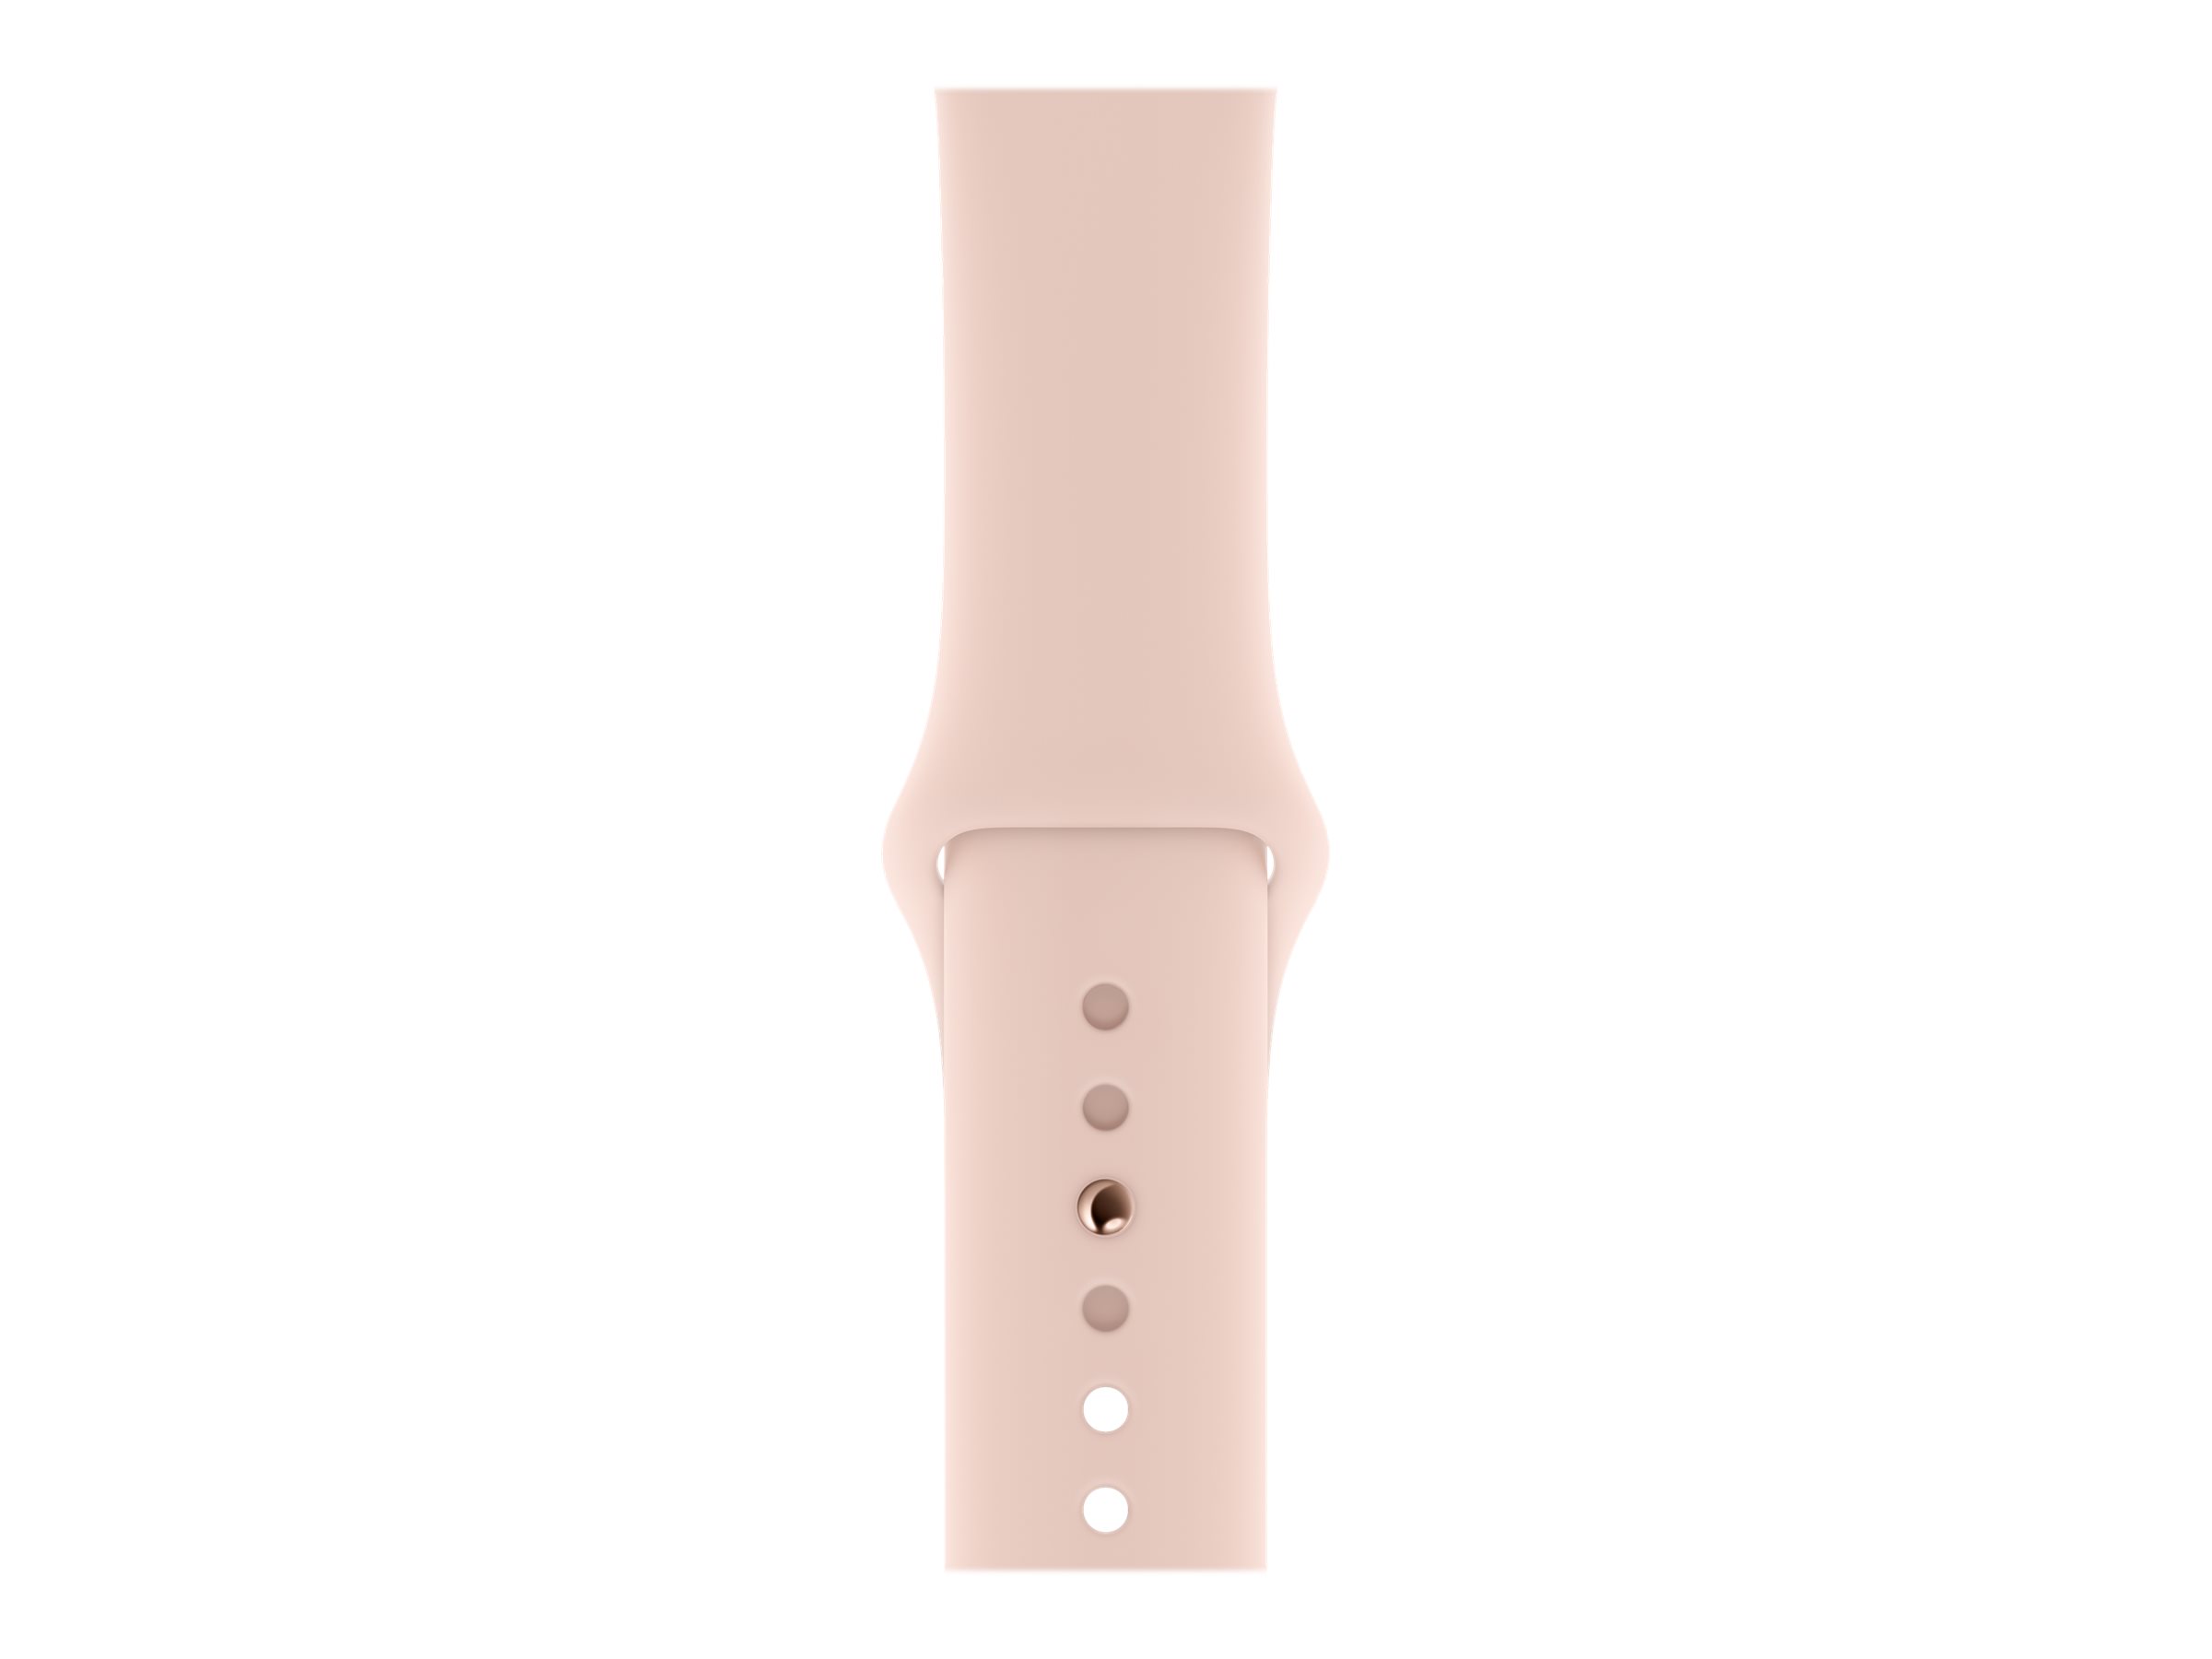 Restored Apple Watch Series 4 40mm GPS + Cellular 4G LTE - Gold - Pink Sport Band (Refurbished) - image 3 of 3